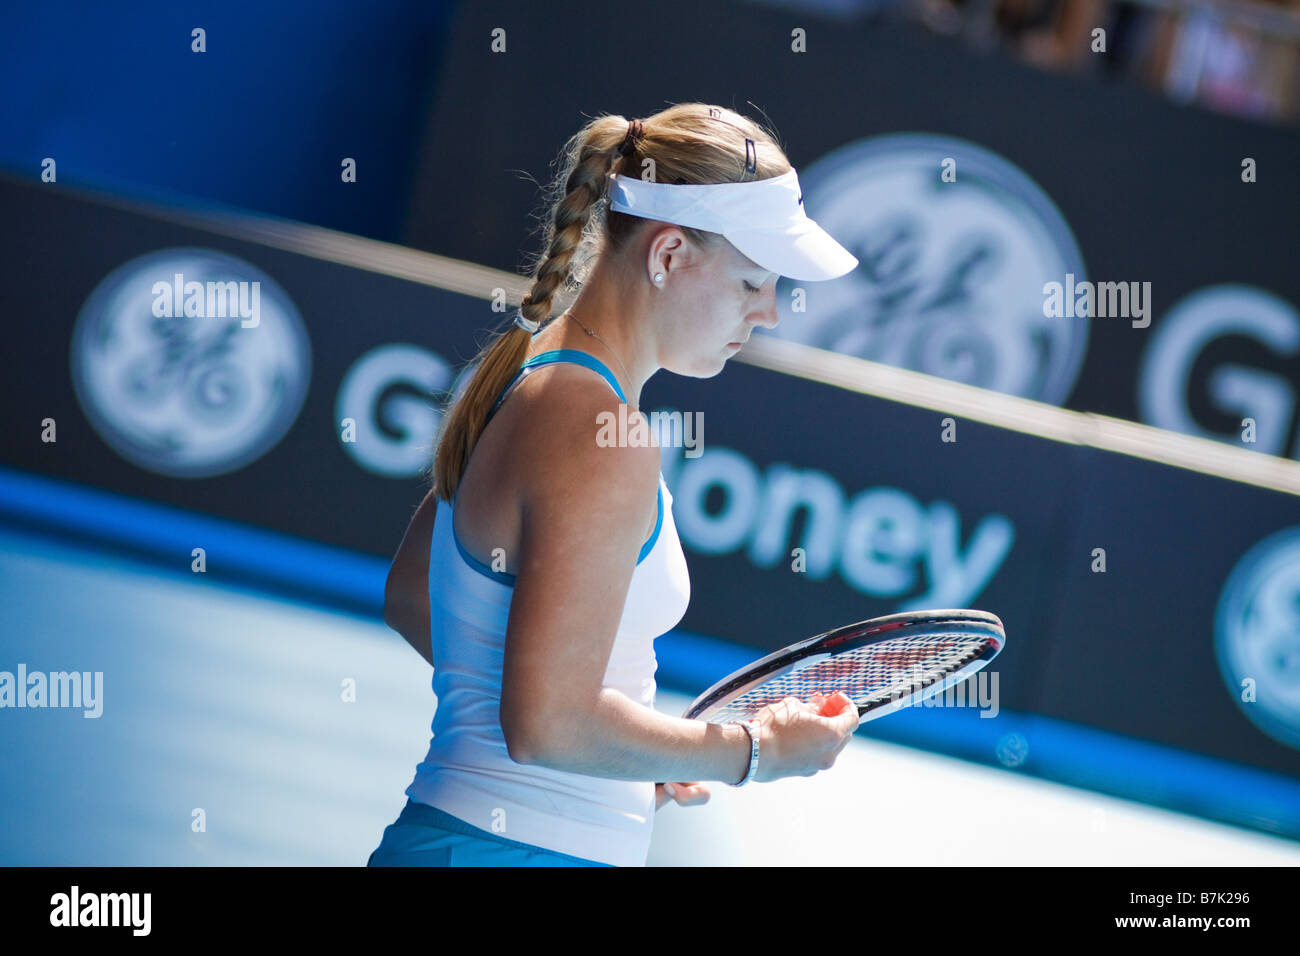 Tennisspielerin Angelique Kerber bei den Australian Open am 20. Januar 2009 in Melbourne Australien. Stockfoto